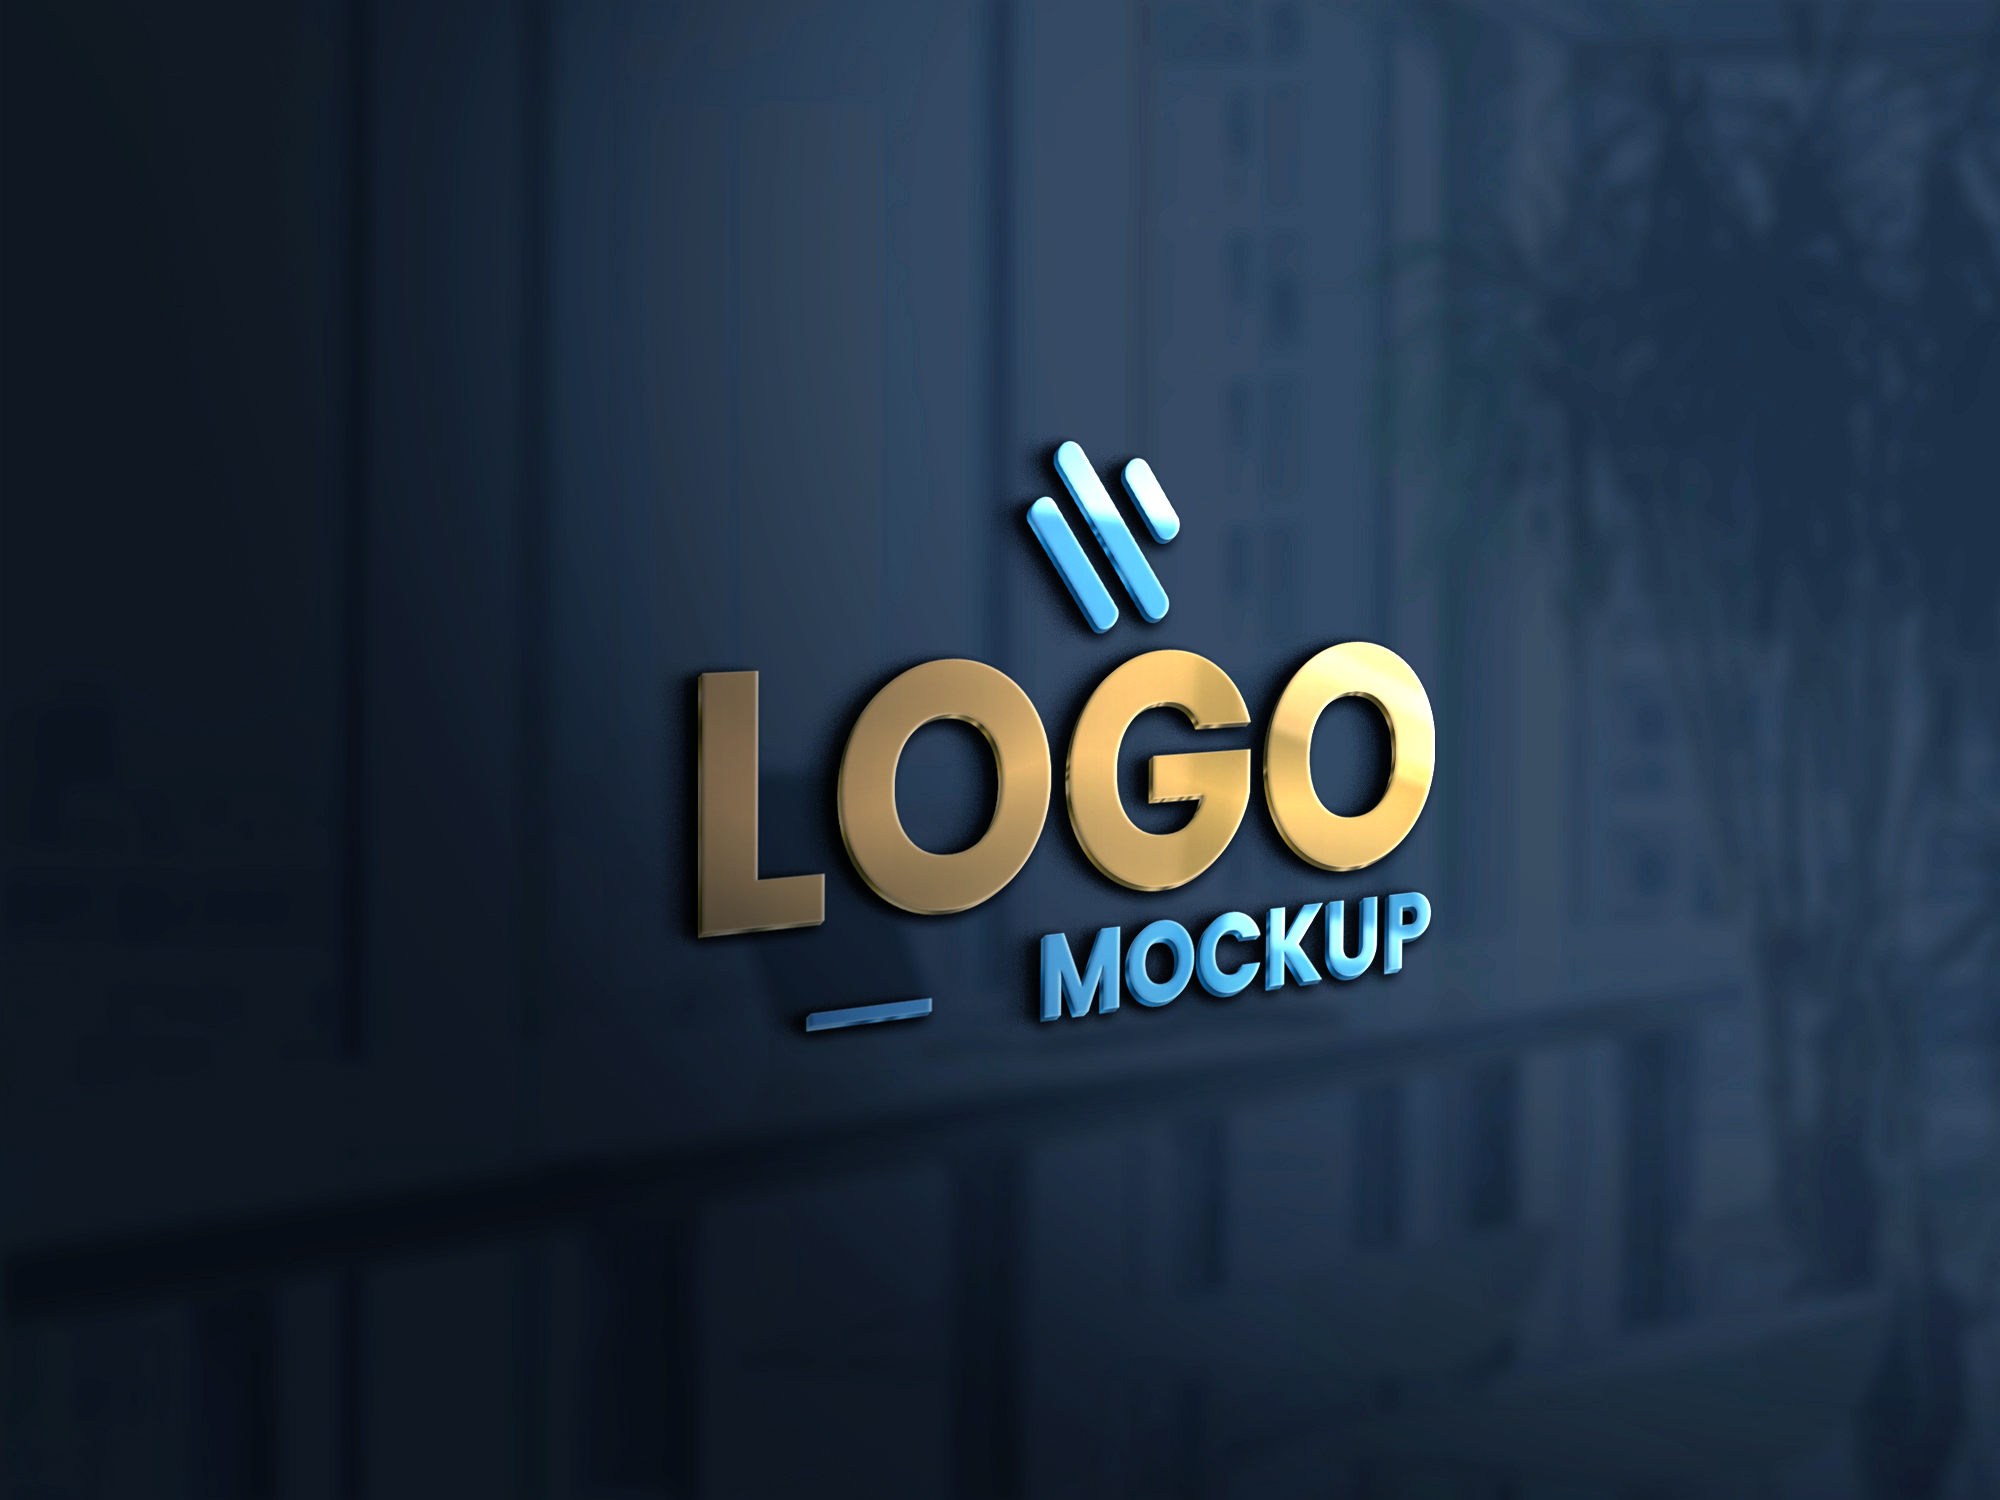 3d Wall Logo Mockup Psd Free Download - Printable Templates